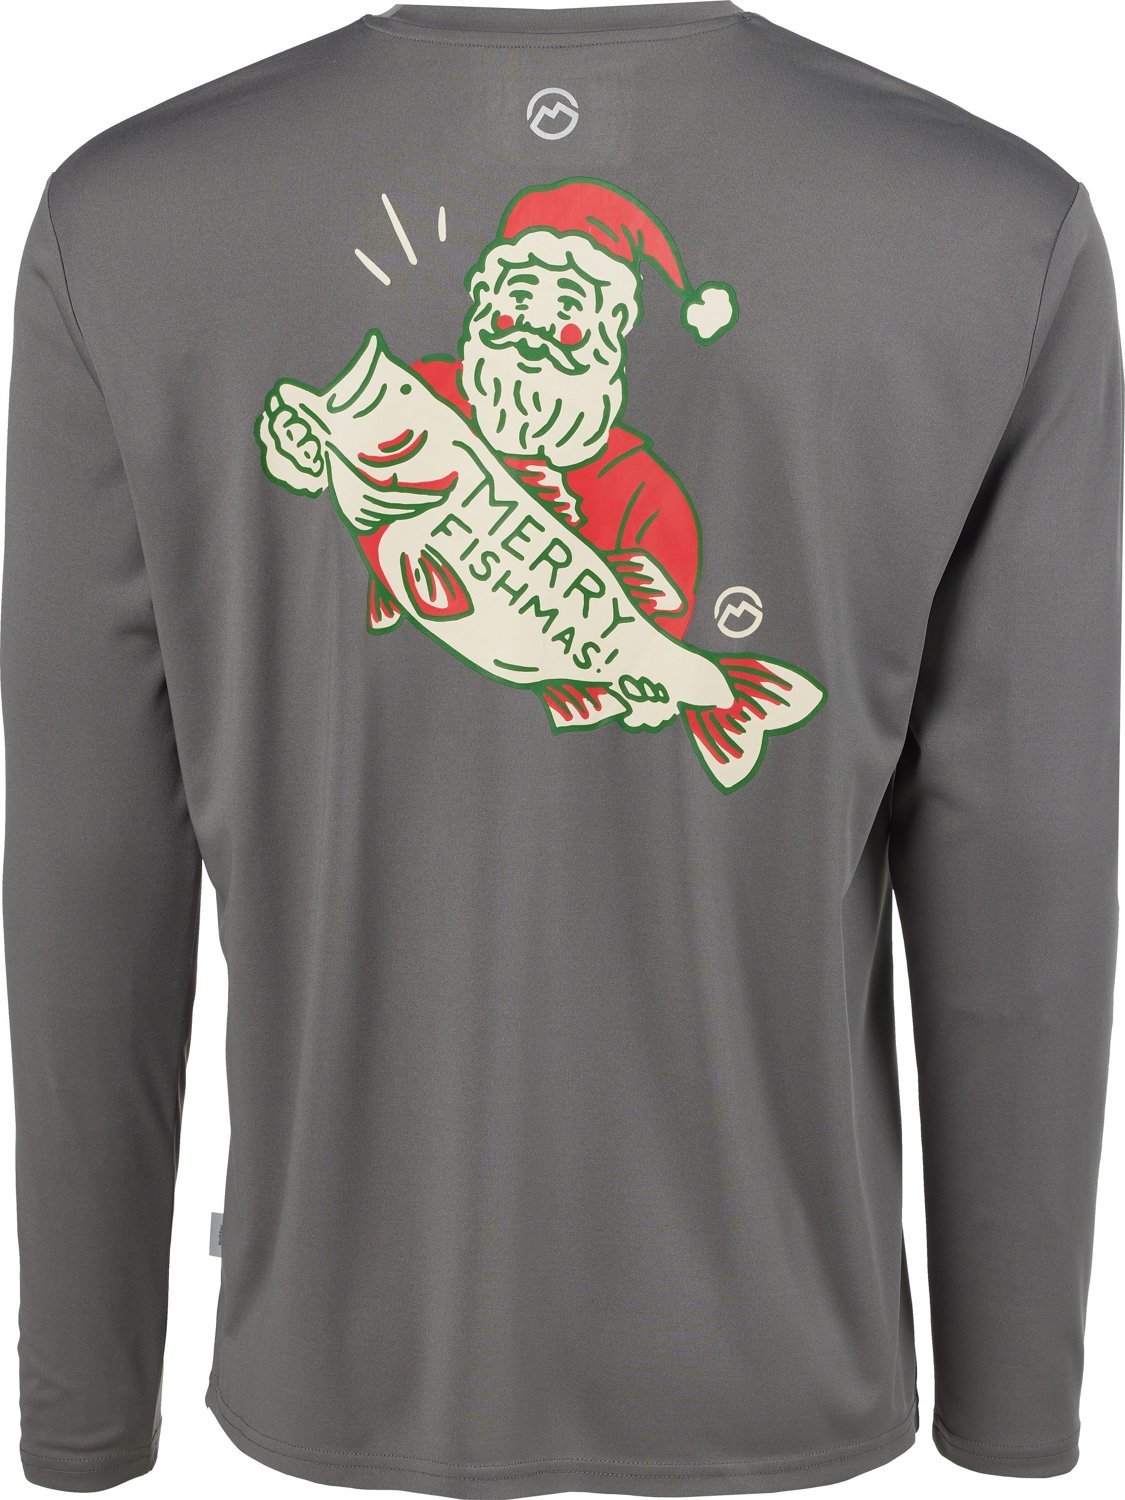 Magellan Outdoors Men's Holiday Merry Fishmas Long Sleeve T-shirt